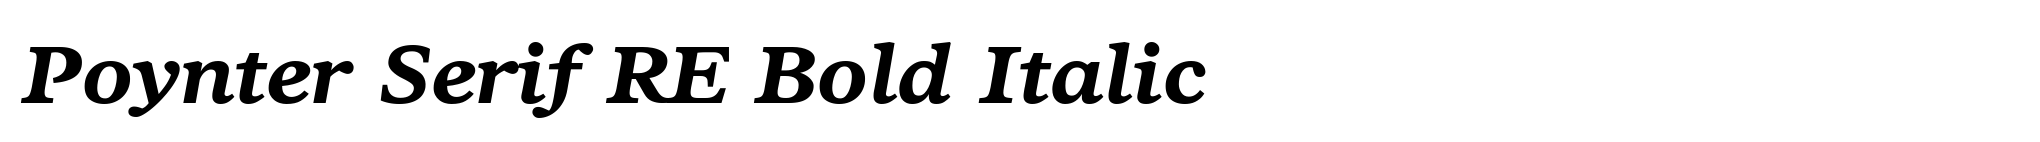 Poynter Serif RE Bold Italic image